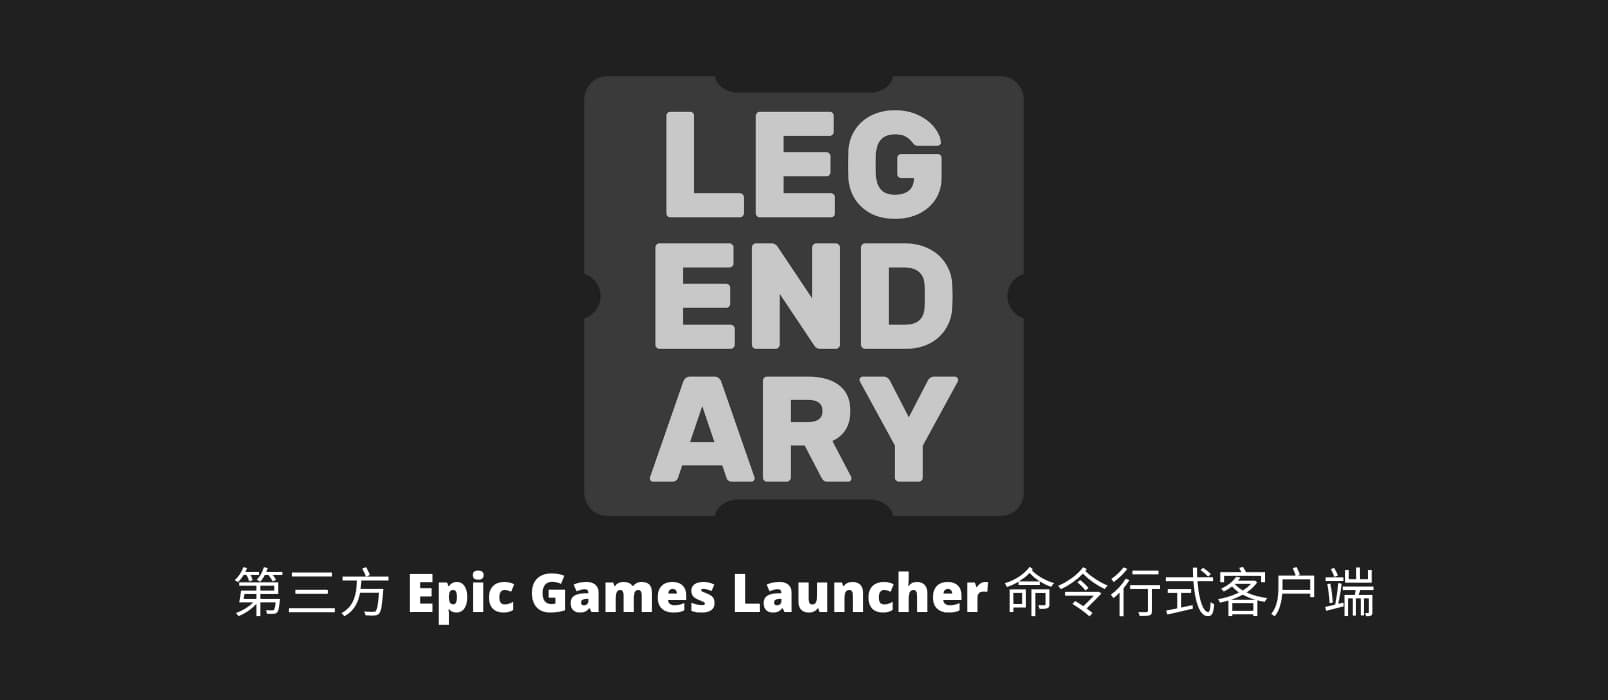 Legendary - 第三方 Epic Games Launcher 客户端，可下载、安装、更新游戏及 DLC，同步云存档